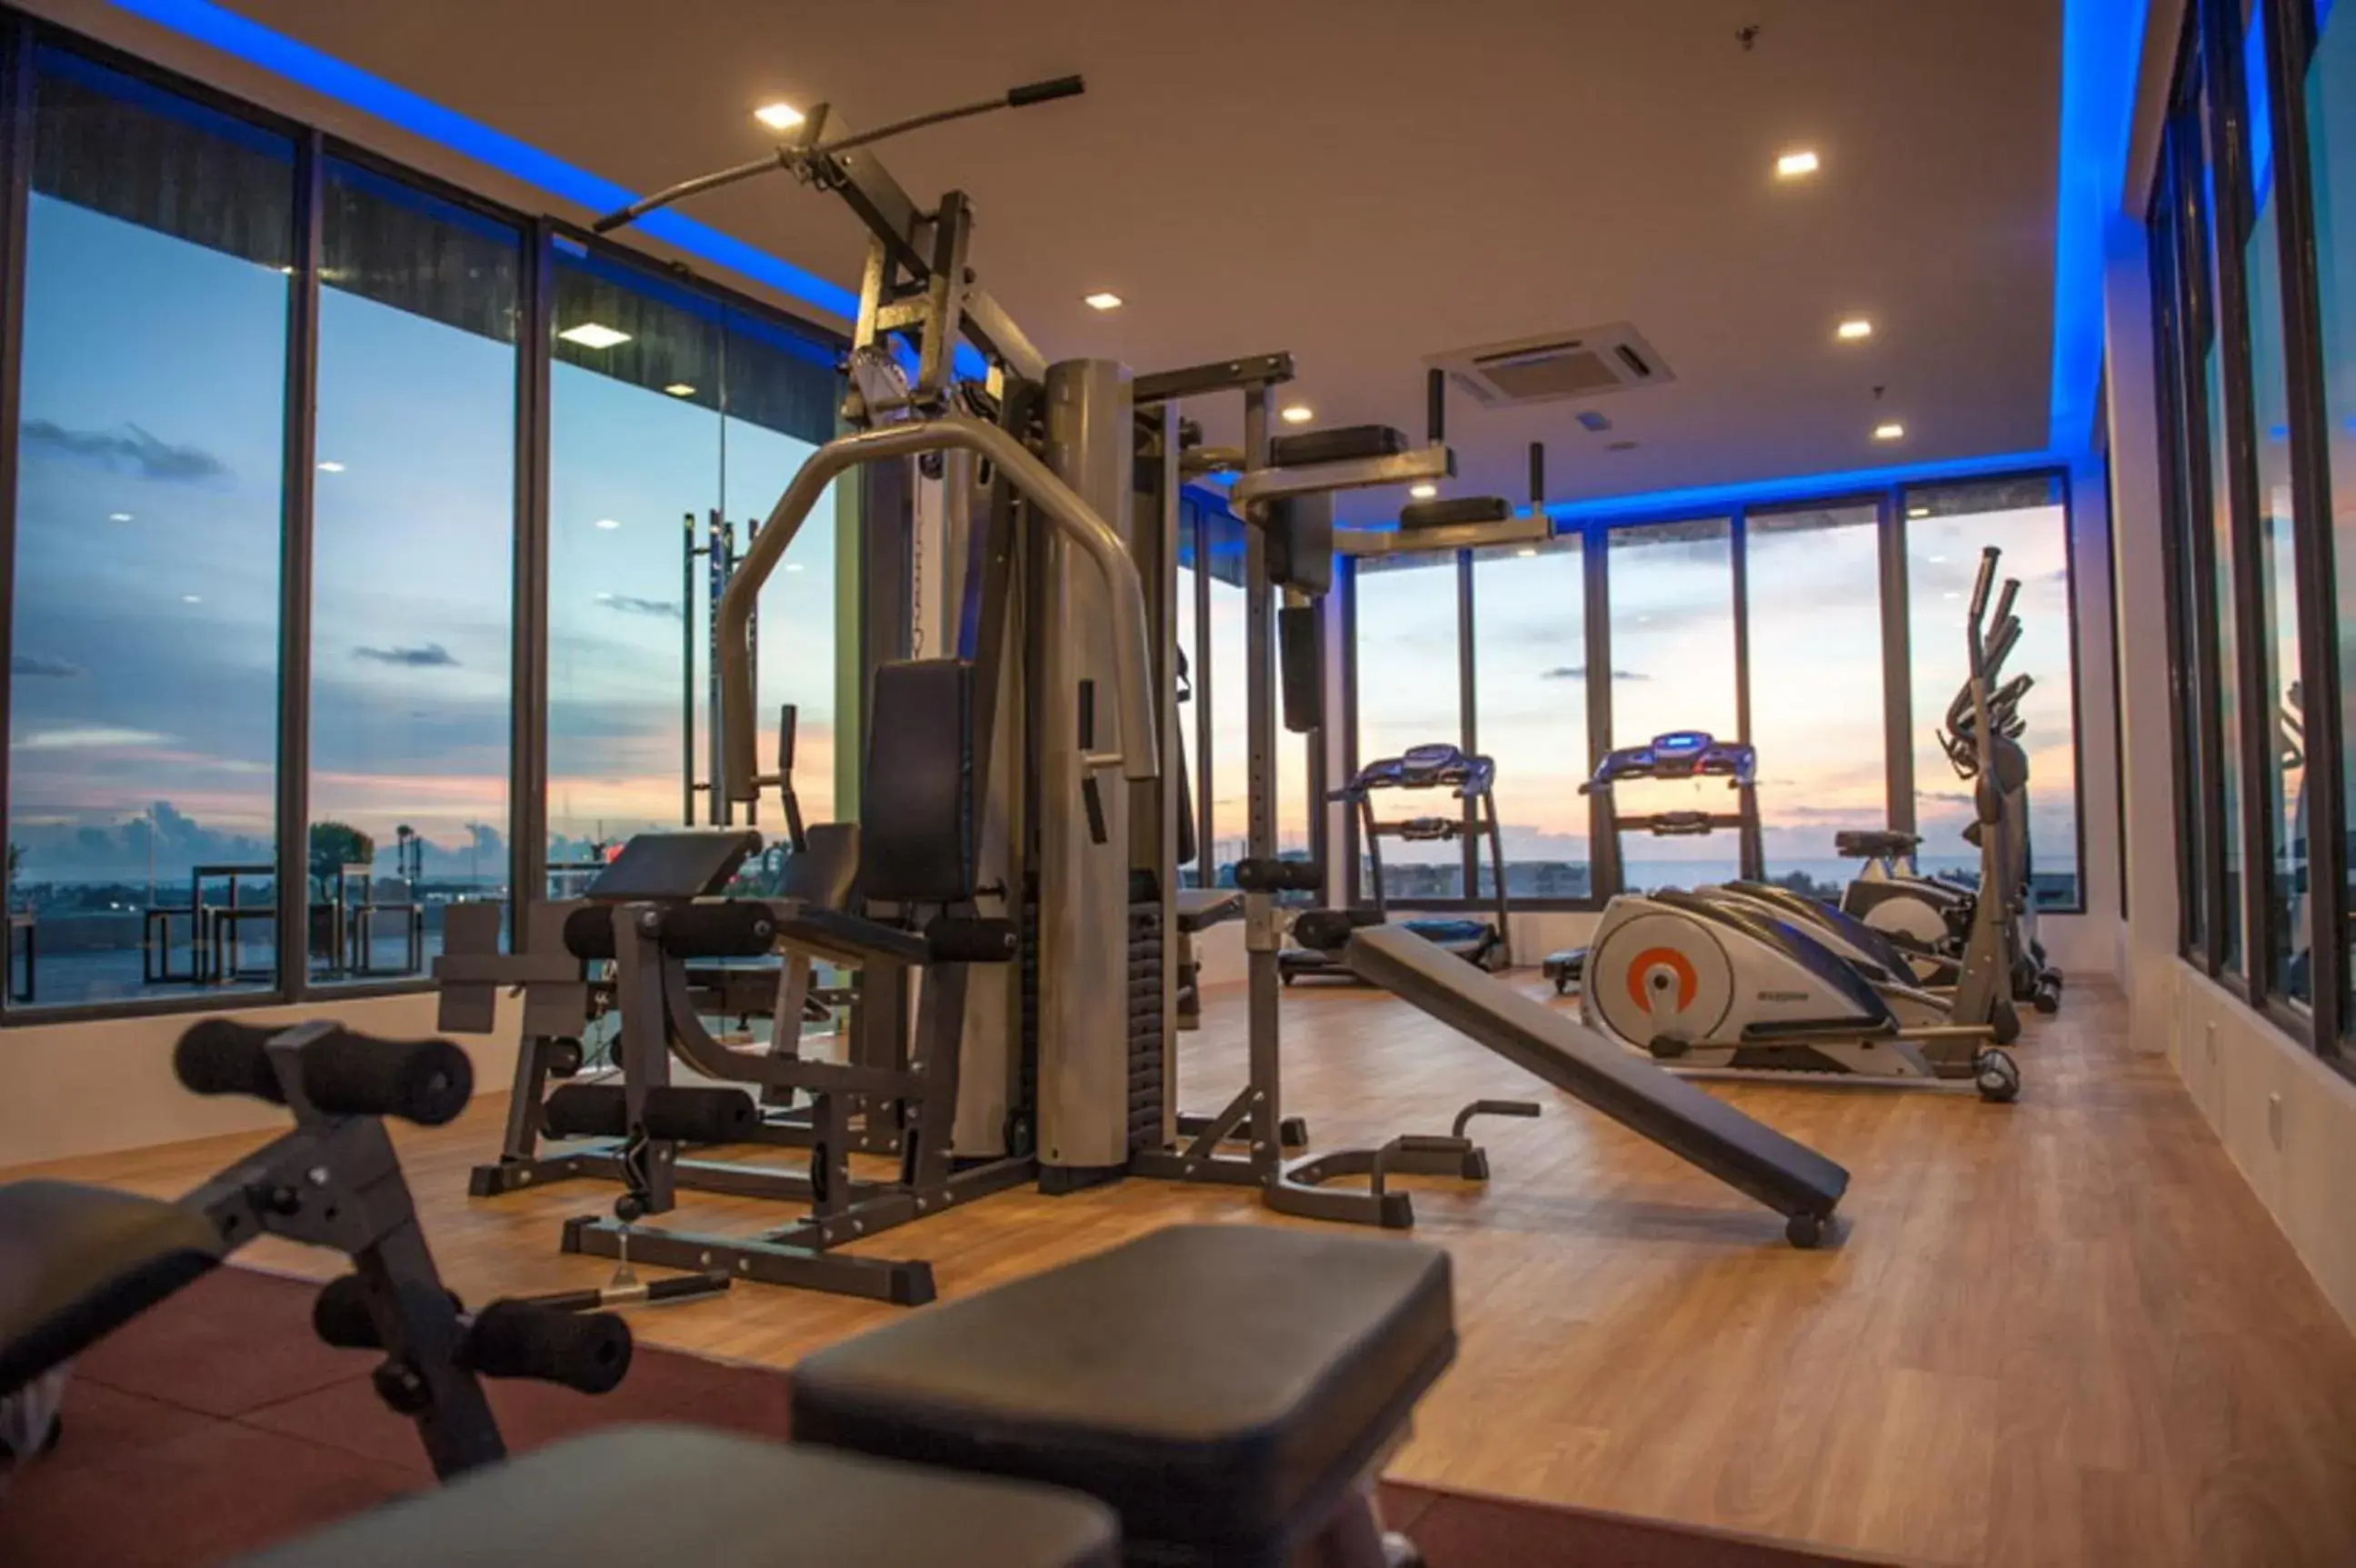 Fitness centre/facilities, Fitness Center/Facilities in Sky Hotel Kota Kinabalu